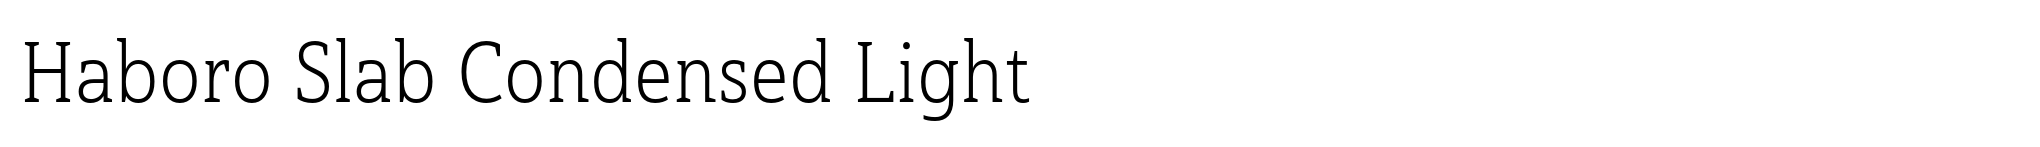 Haboro Slab Condensed Light image